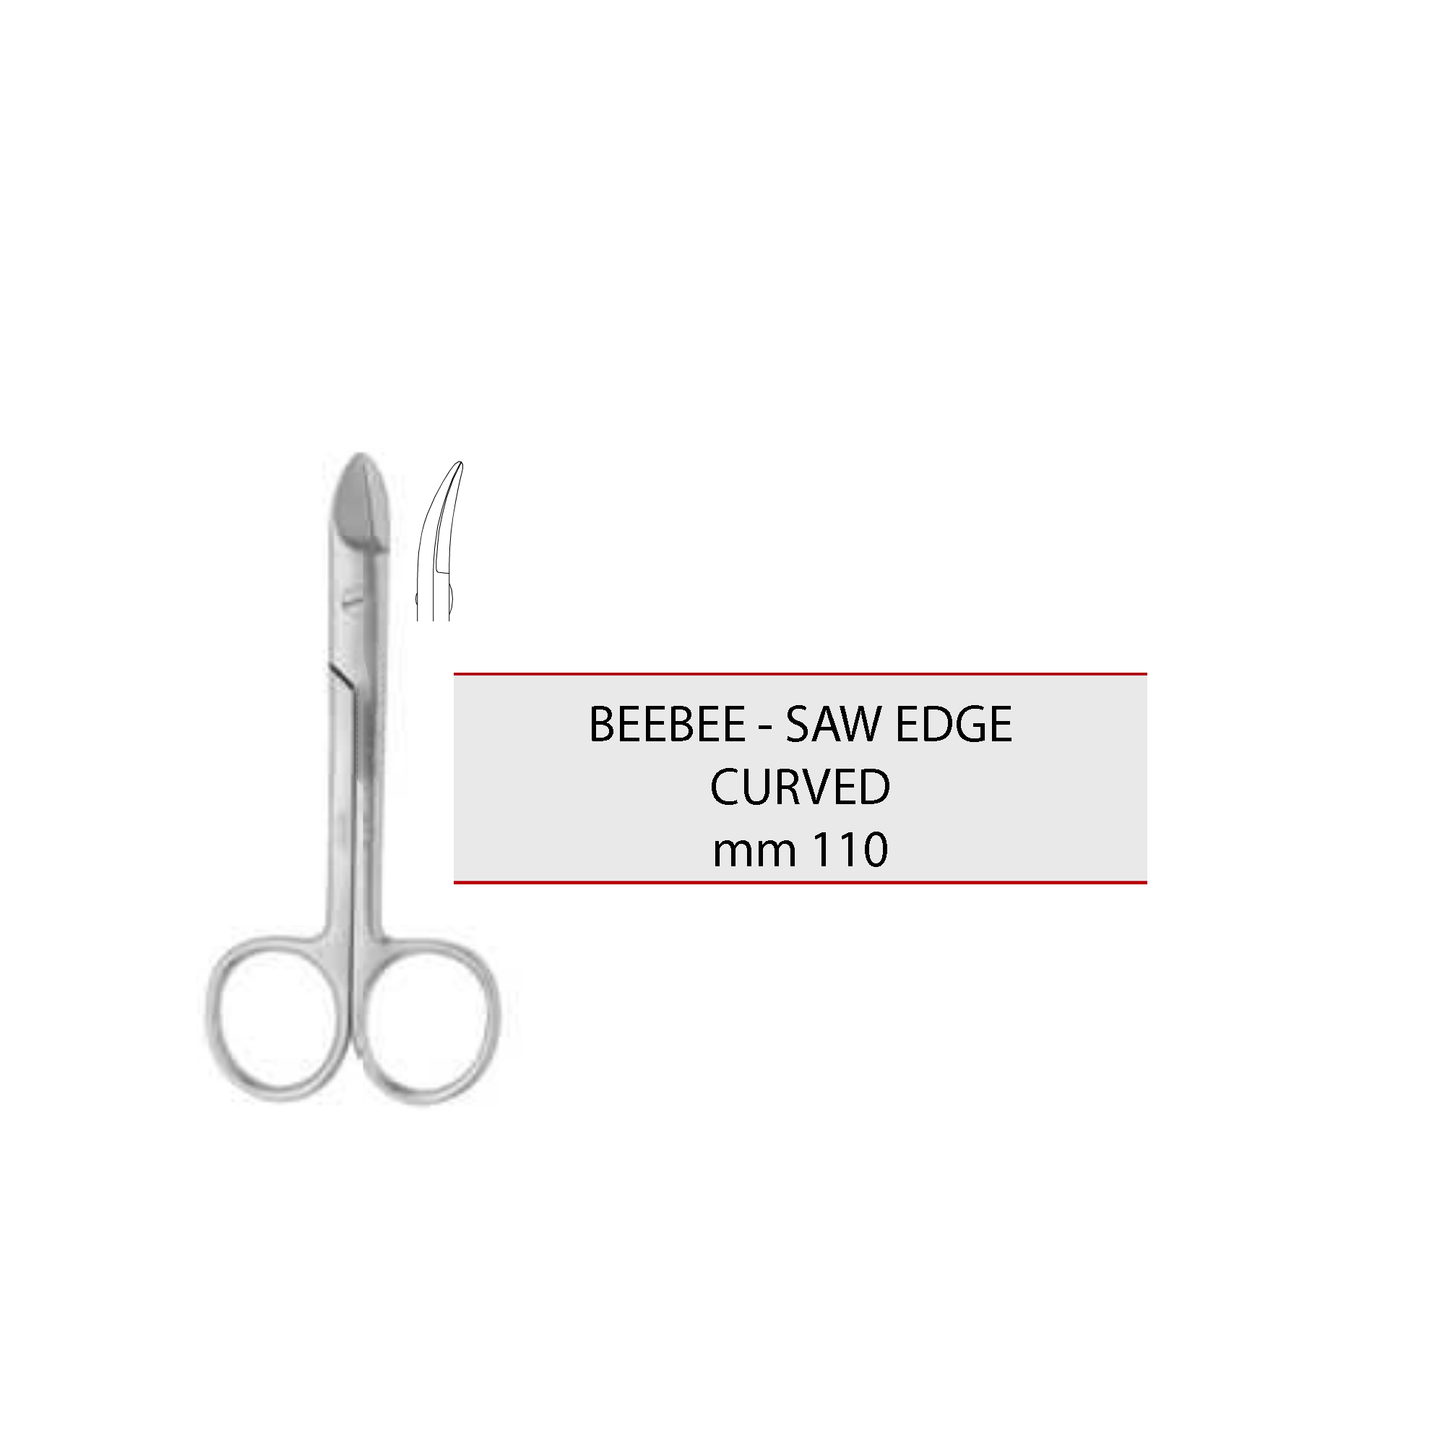 BEEBEE – SAW EDGE CURVED mm 110 cod 1025-6